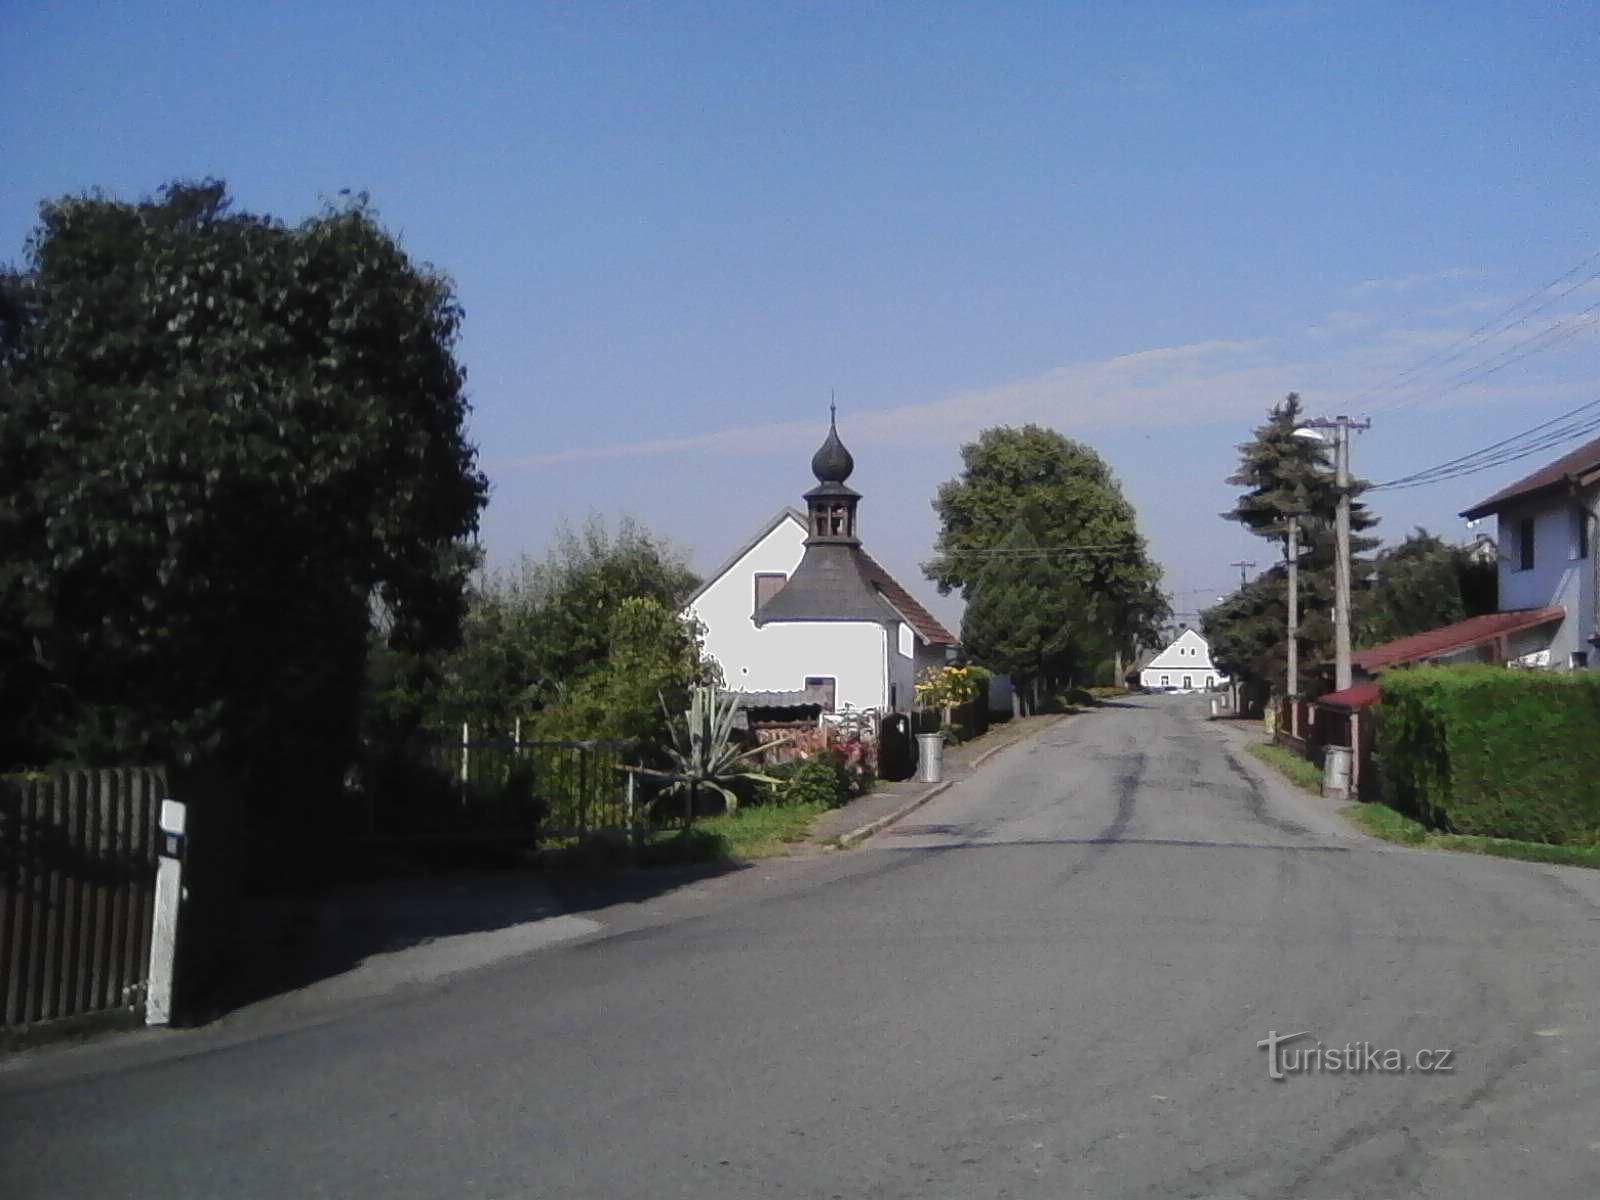 2. Kapel in het dorp Horní Hořice.